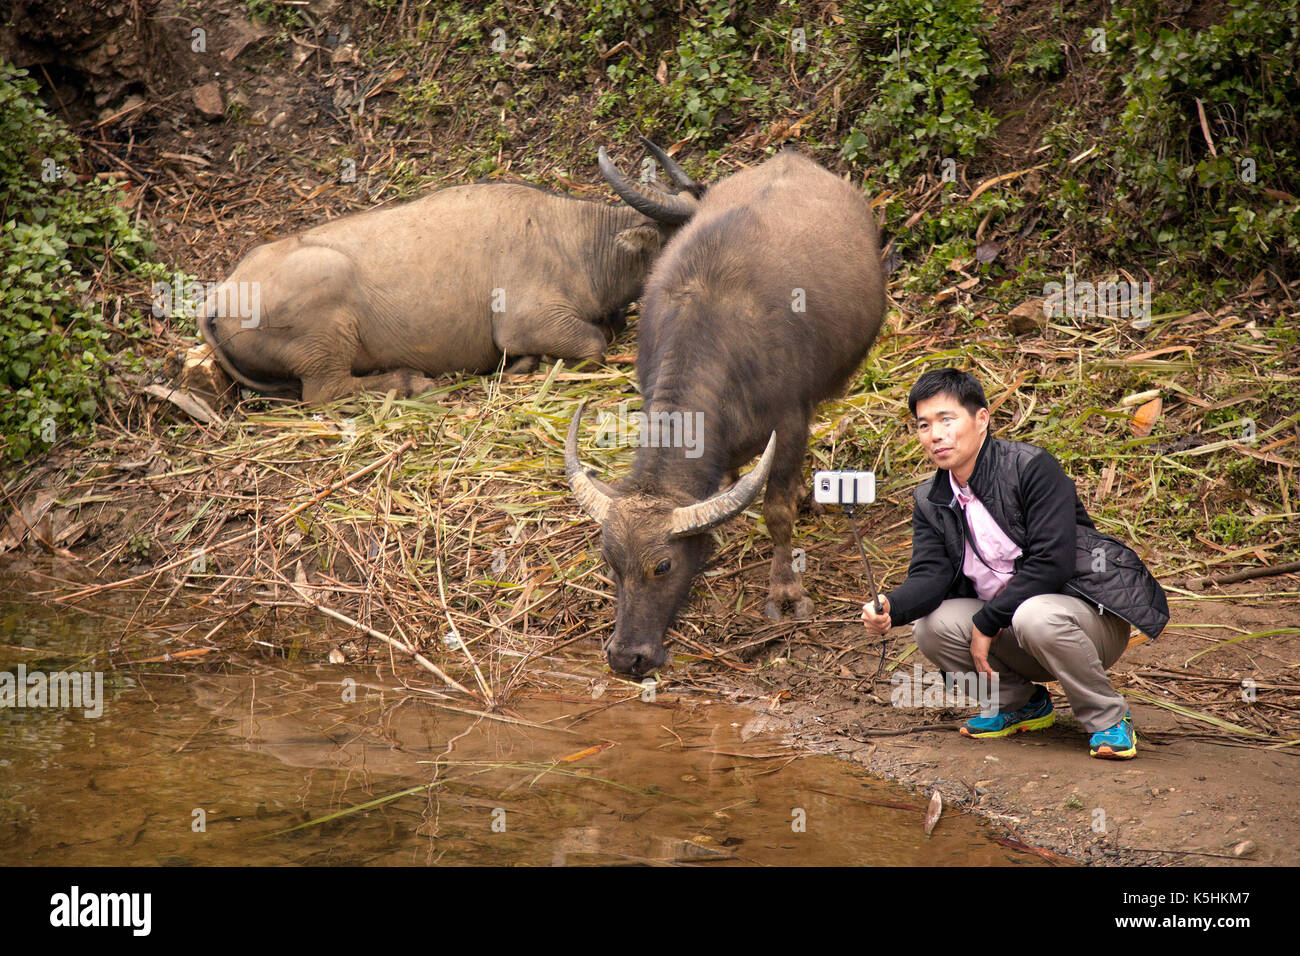 Turismo selfie orientales toma una foto con el búfalo de agua usando un stick selfie Foto de stock